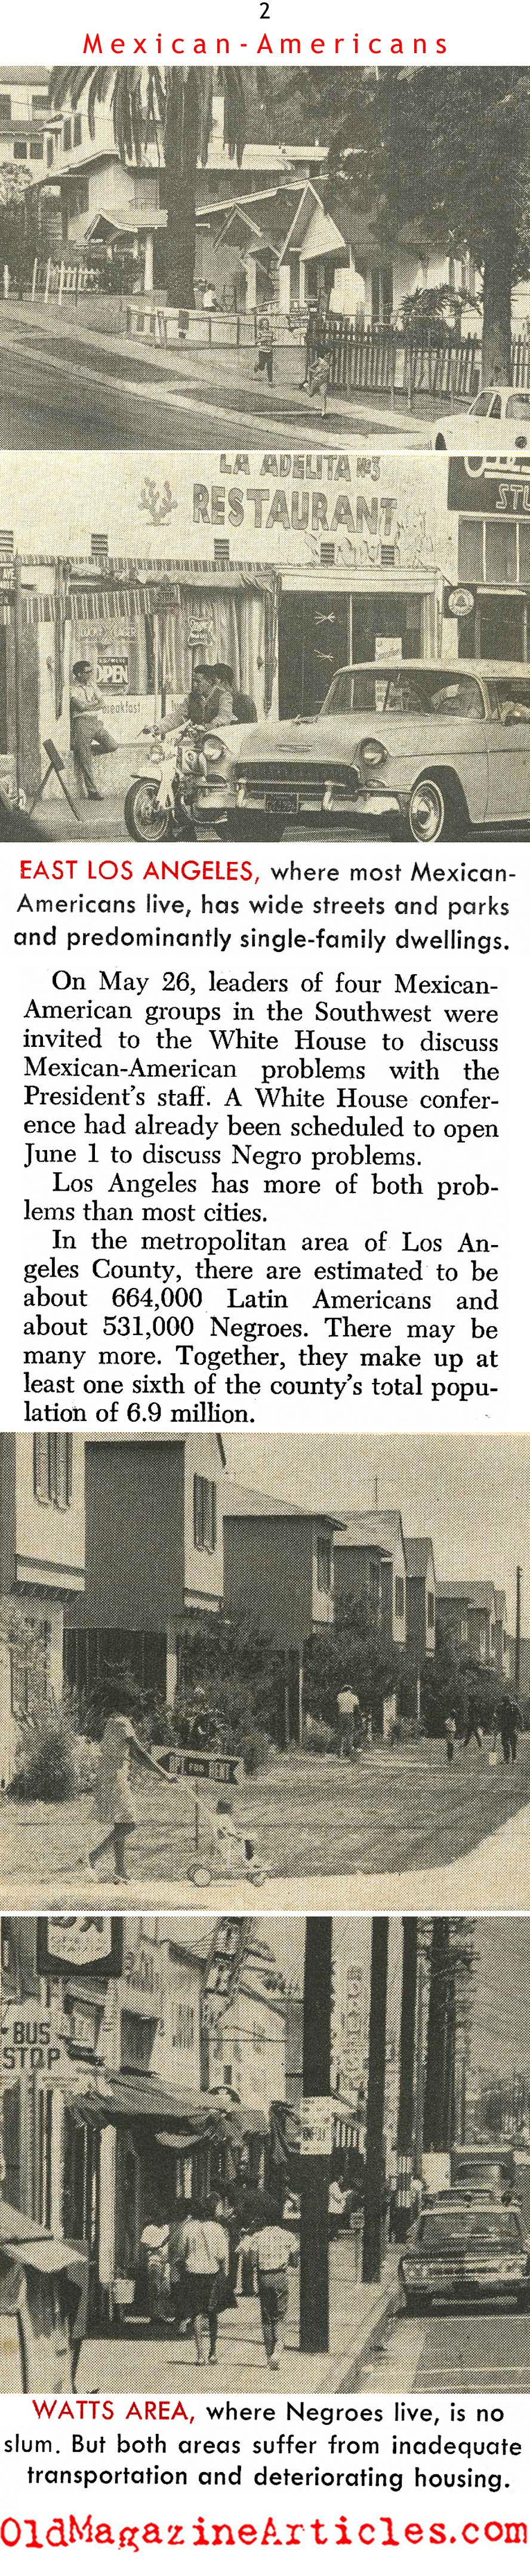 The Chicano Struggle (United States News, 1966)